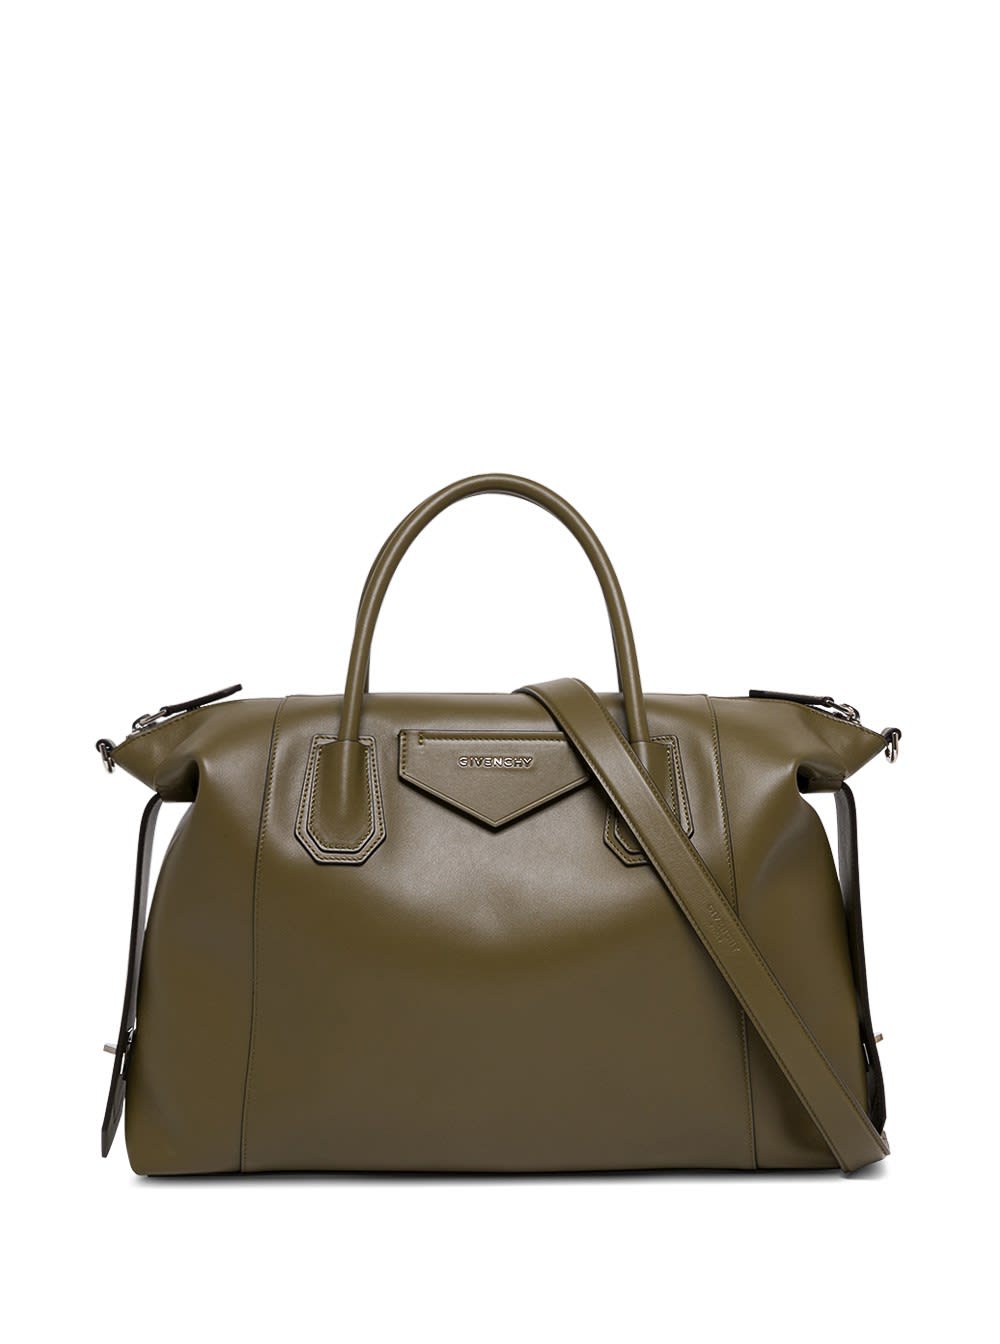 Givenchy Antigona Soft Handbag In Green Leather